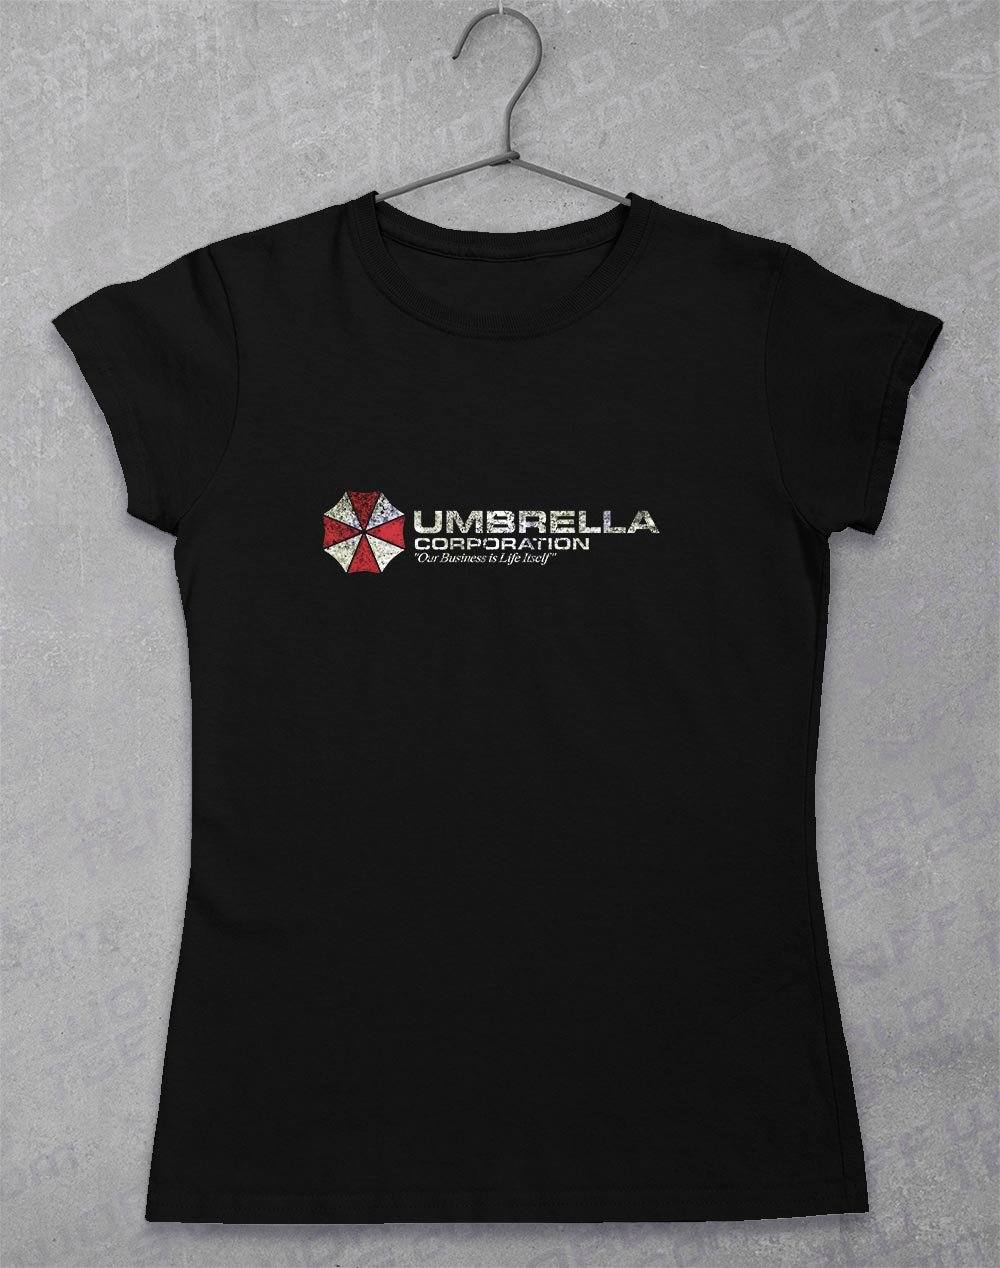 Umbrella Corporation - Women's T-Shirt 8-10 / Black  - Off World Tees